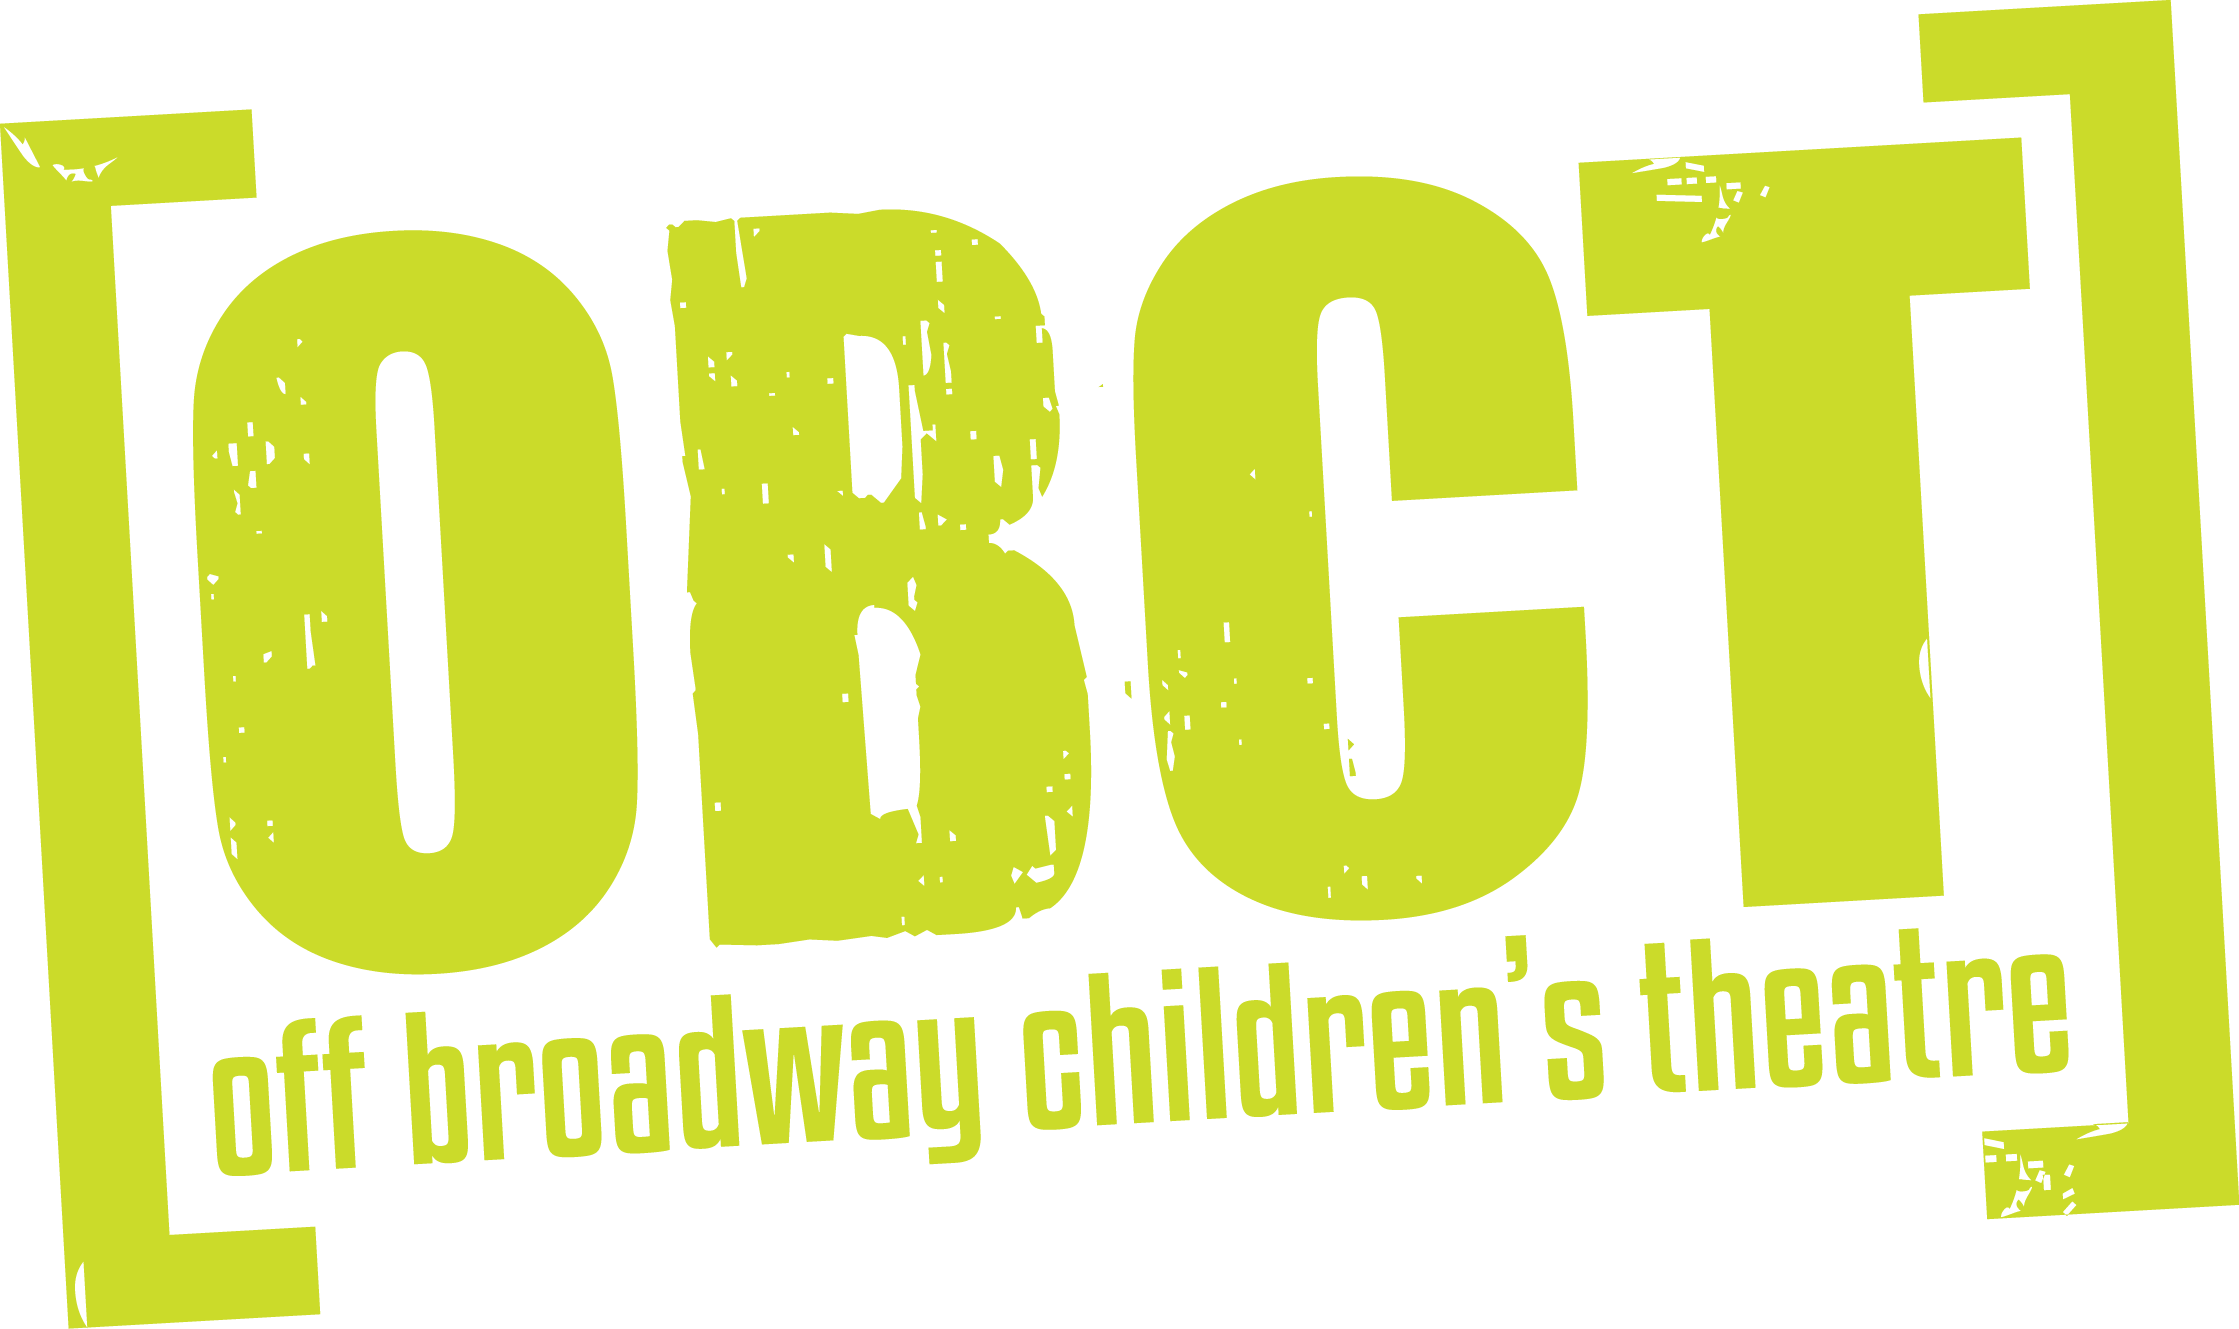 Off Broadway Logo